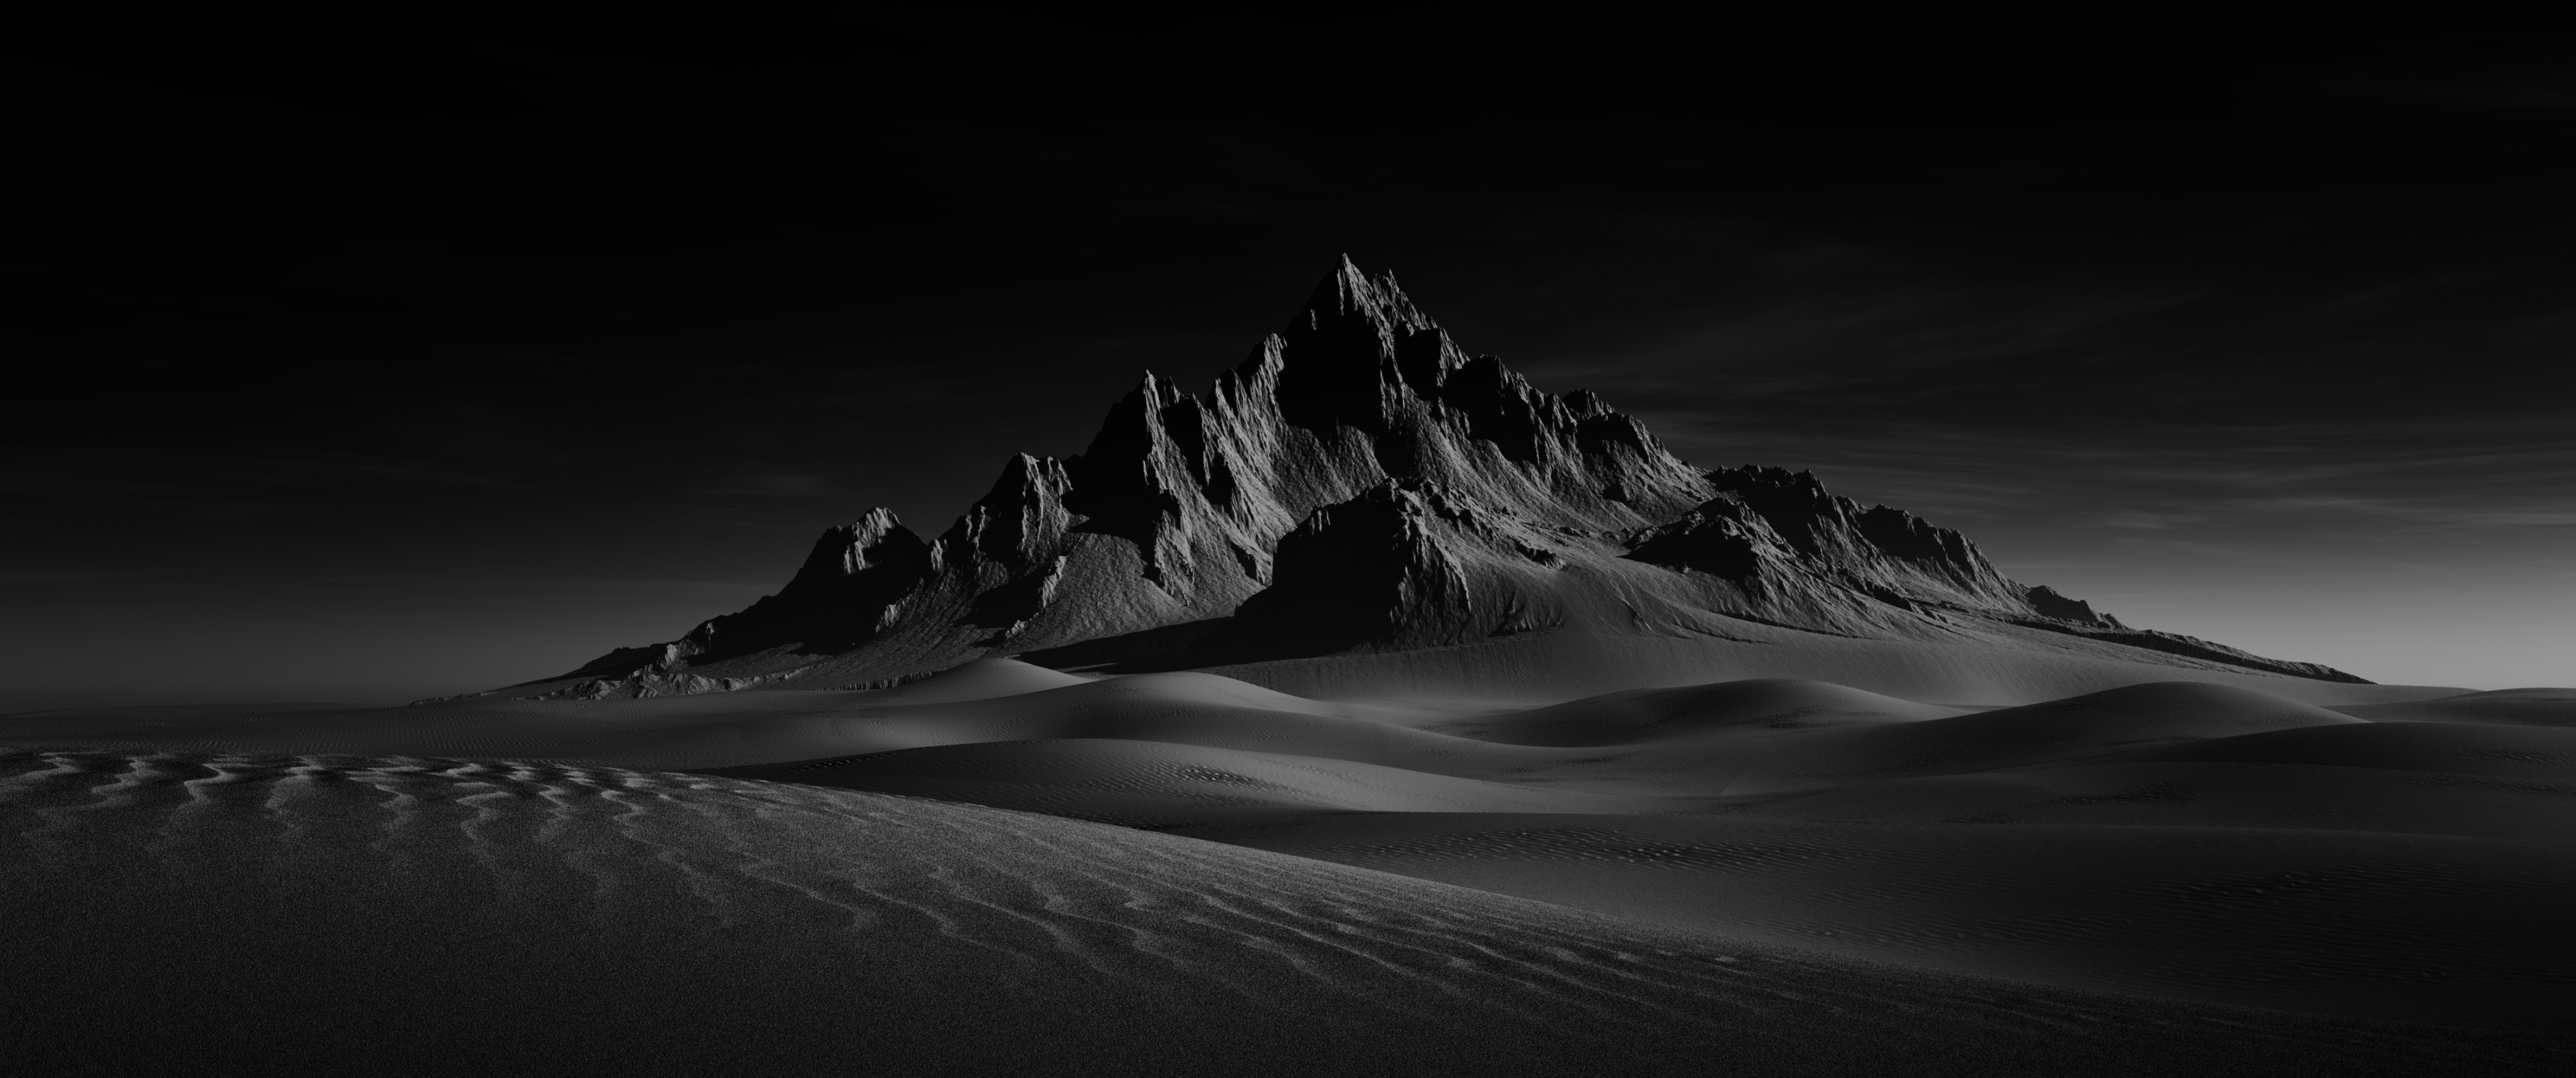 Desert 4K, Sand Dunes, Dark background, Monochrome, Nature, #6409